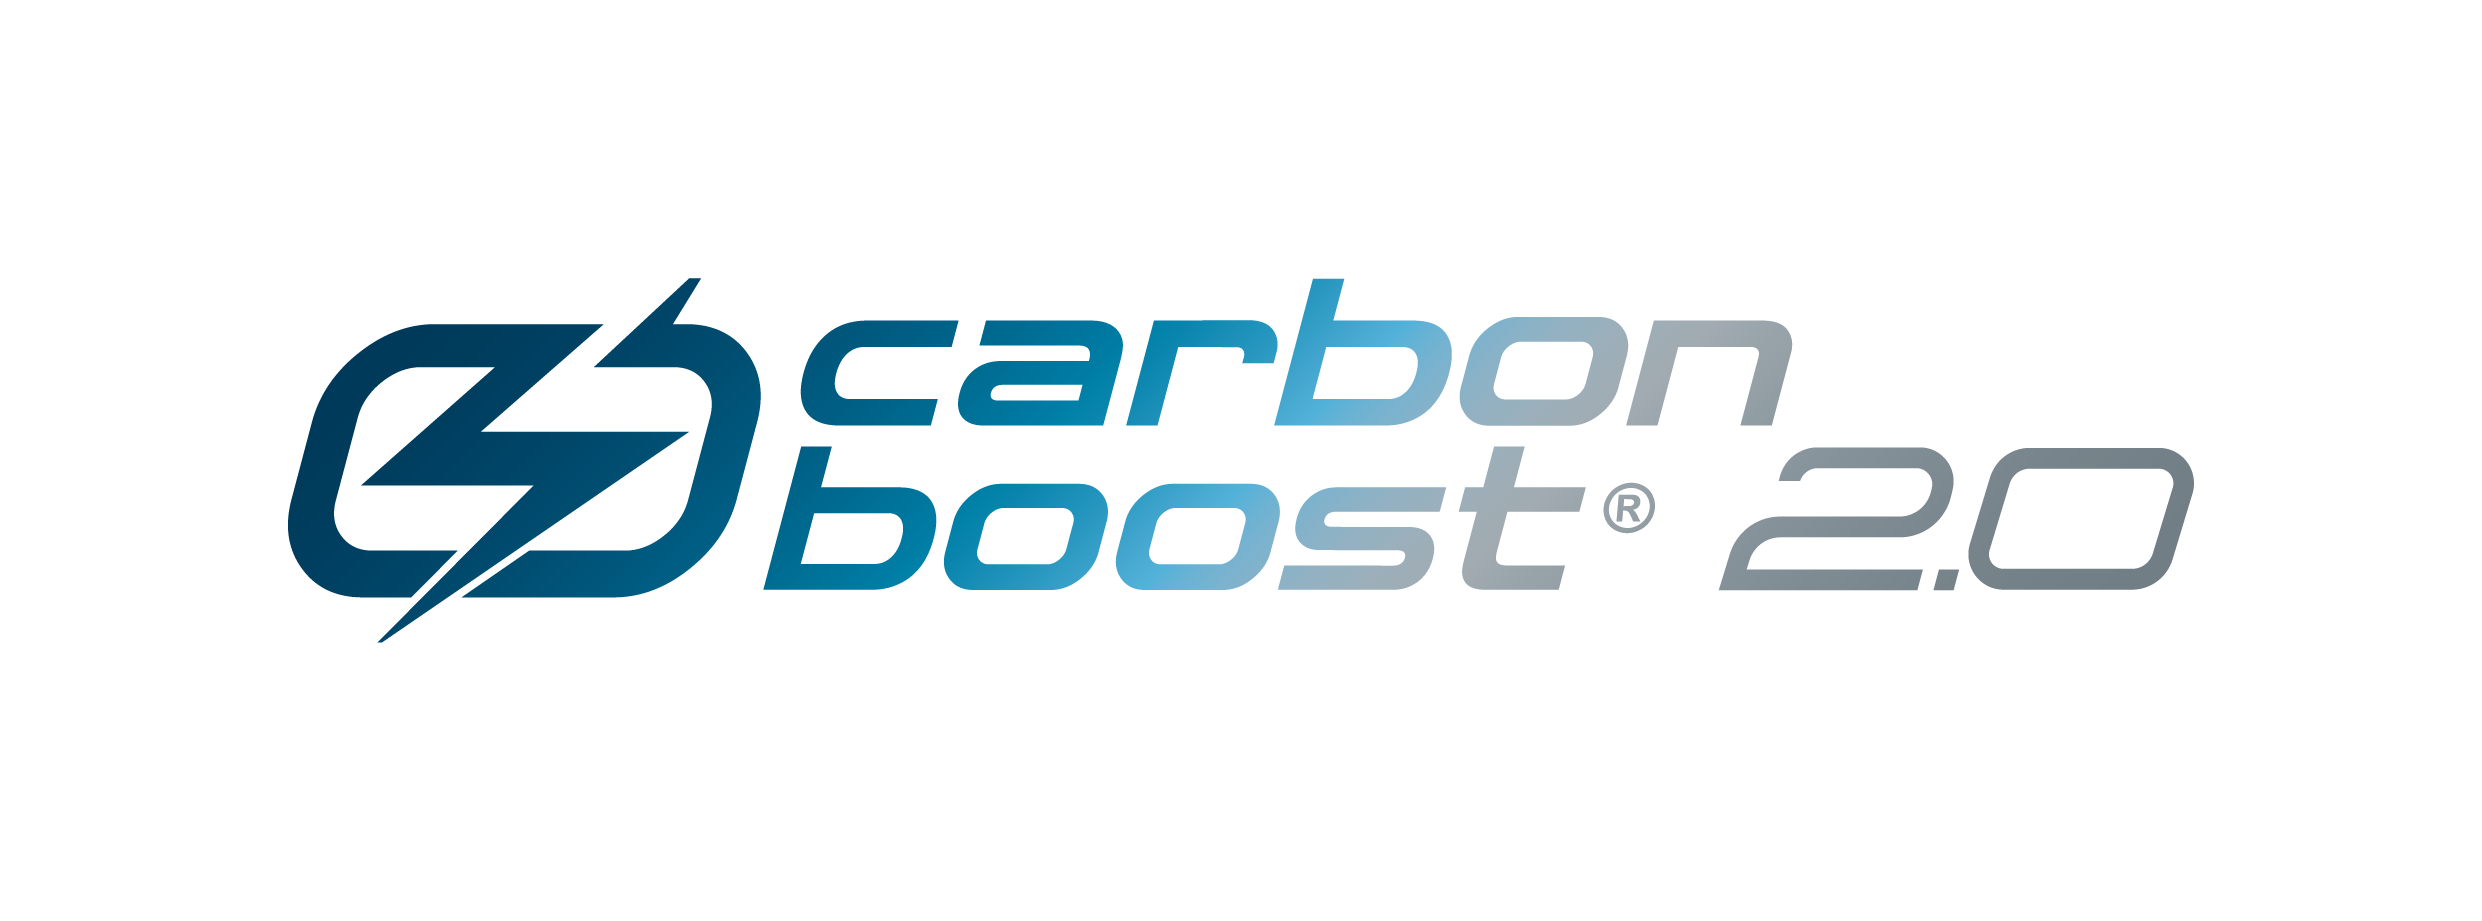 Exide_Premium_Carbon_Boost_logo